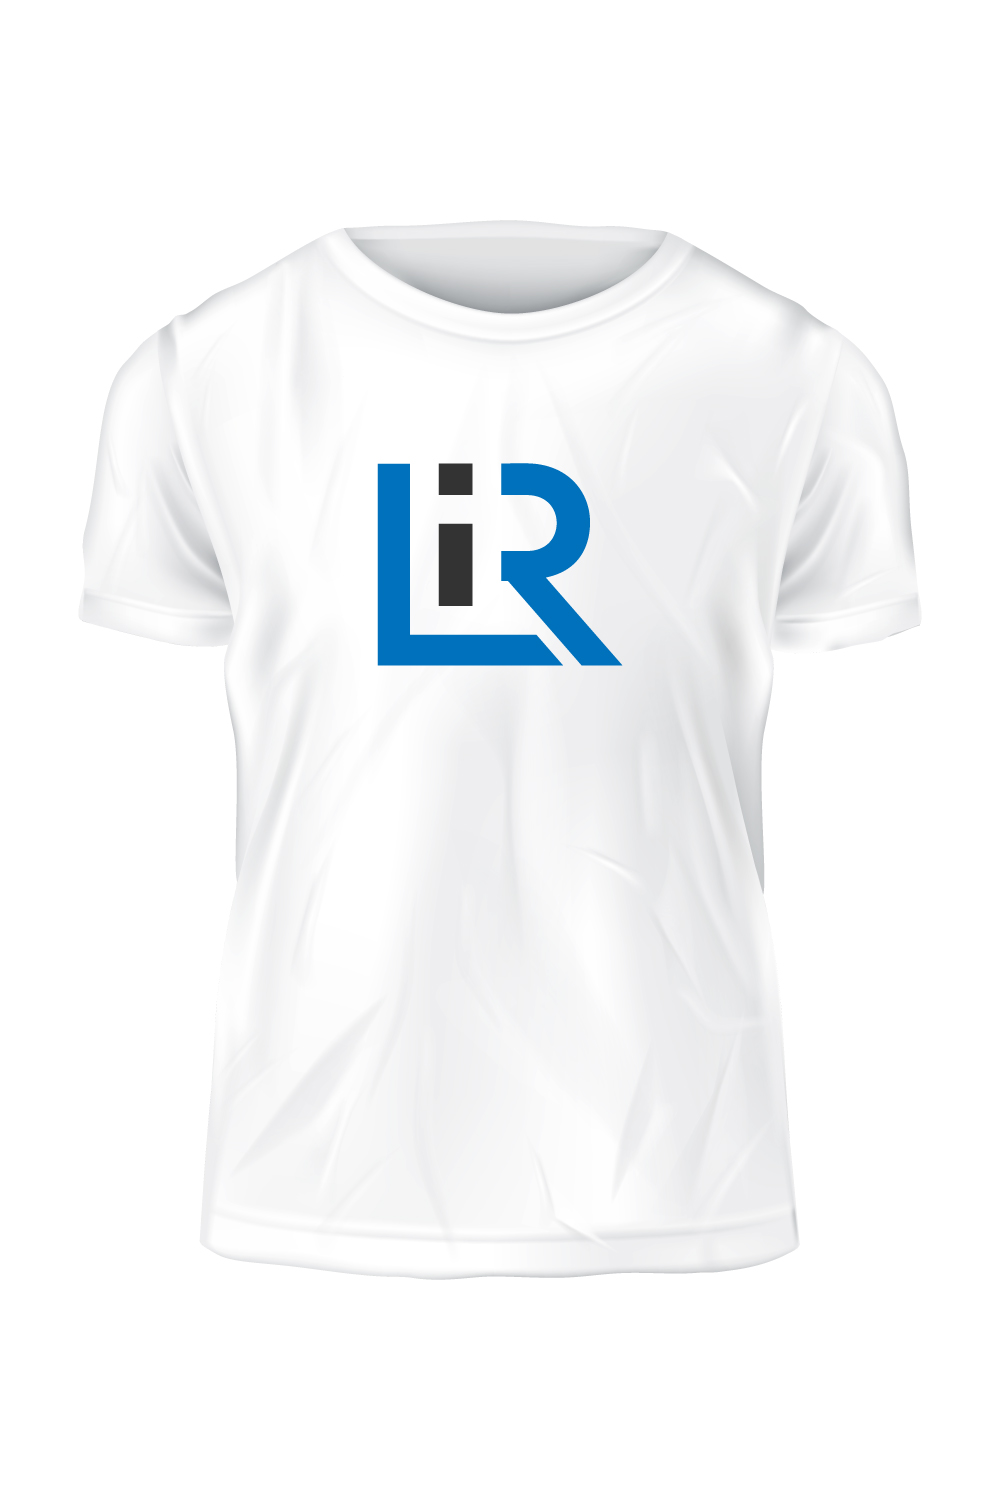 LiR logo design pinterest preview image.